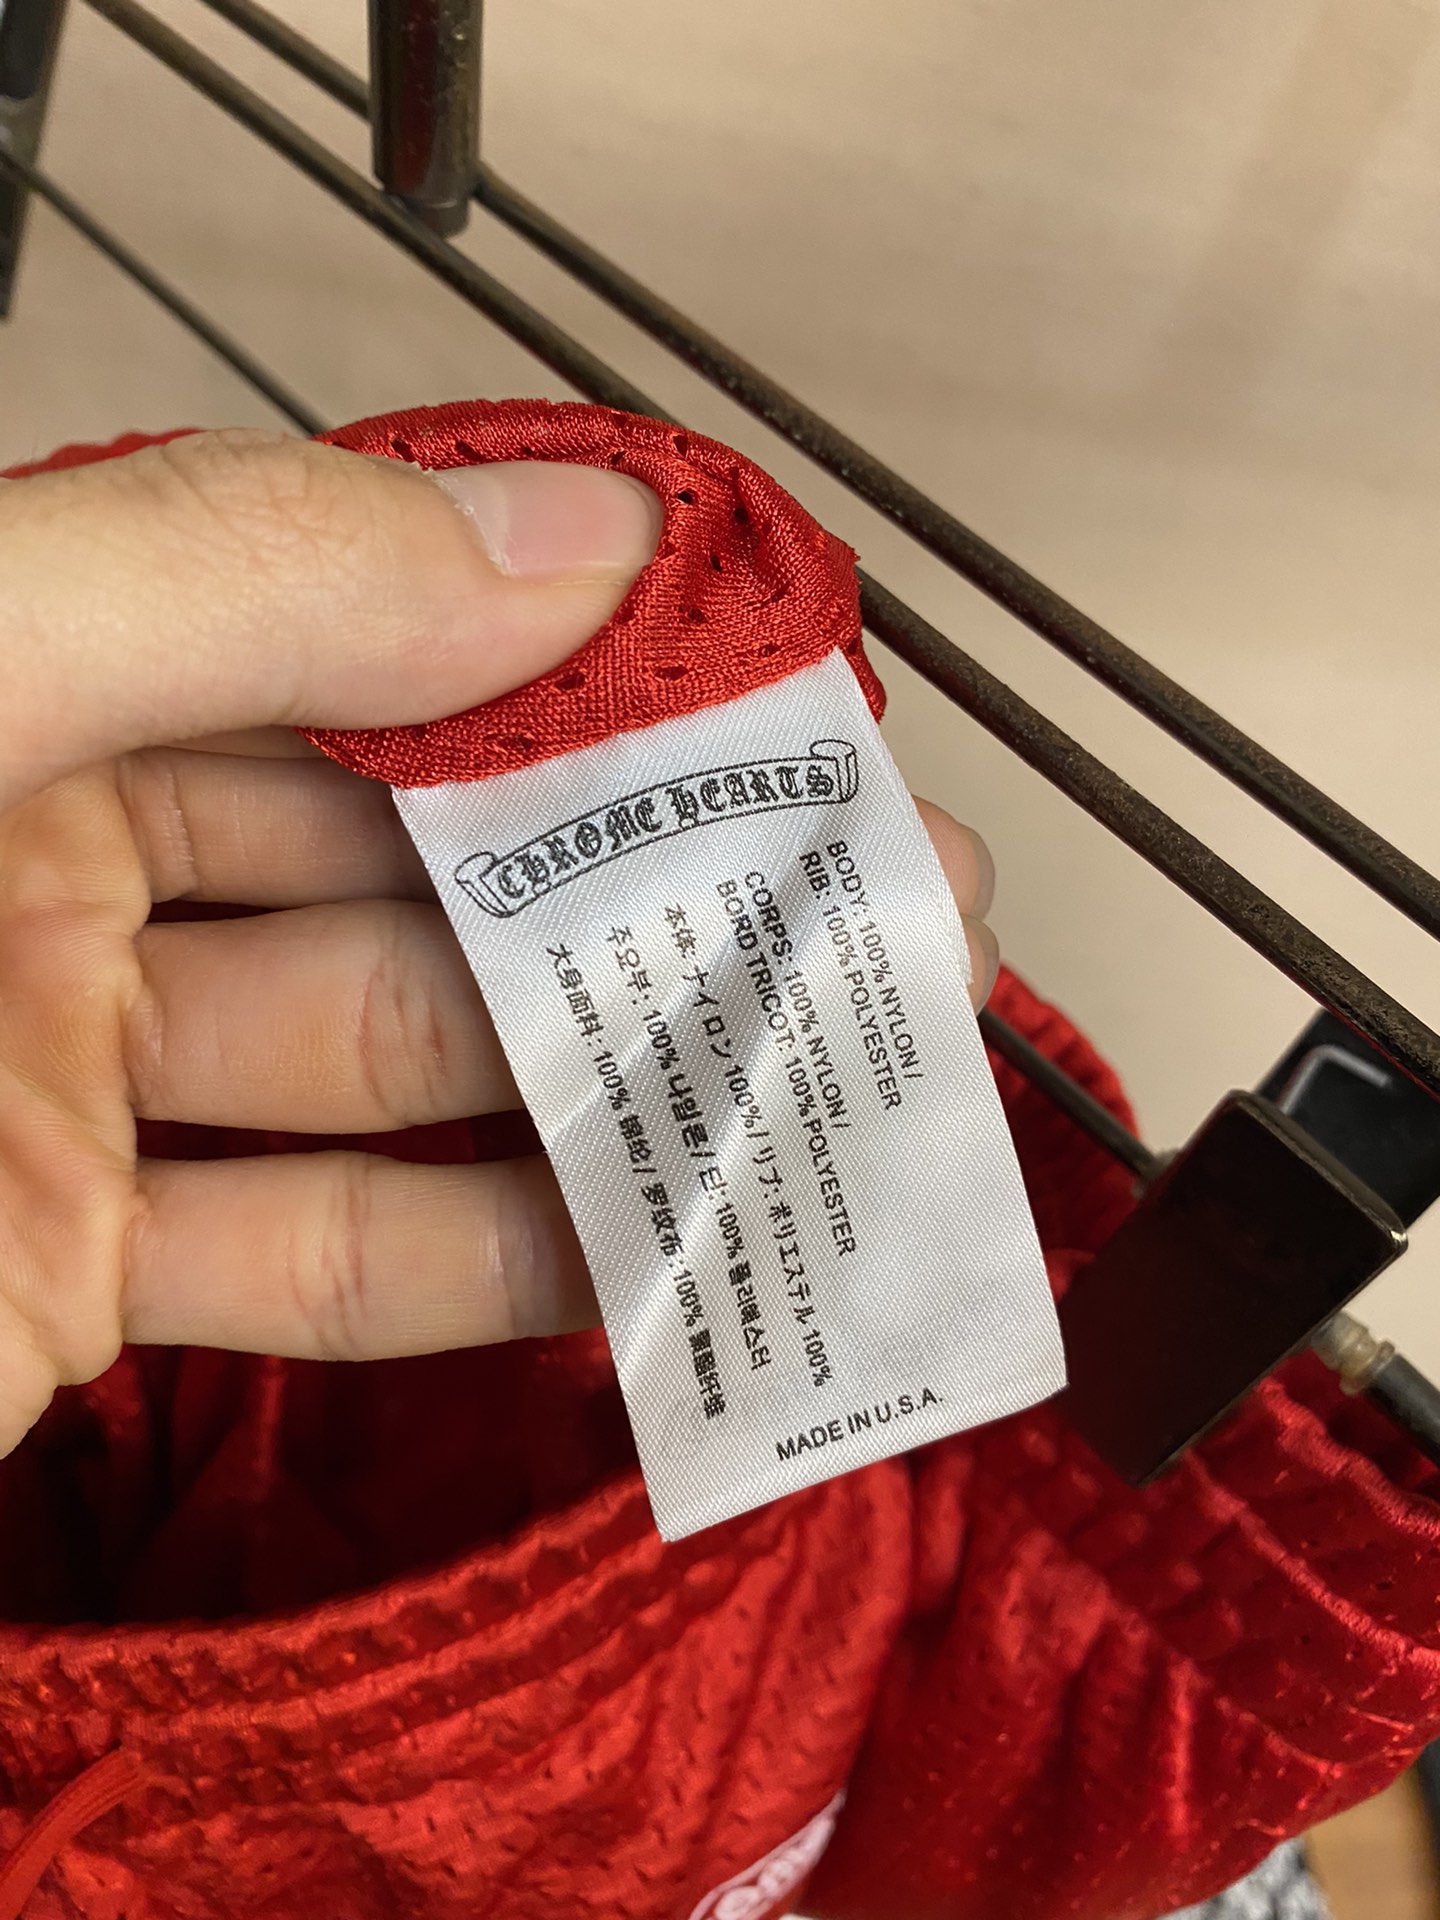 ChromeHearts克罗心MattyBoy红色网眼长裤最早拿到原版确保万无一失才上架的尺码S-XL